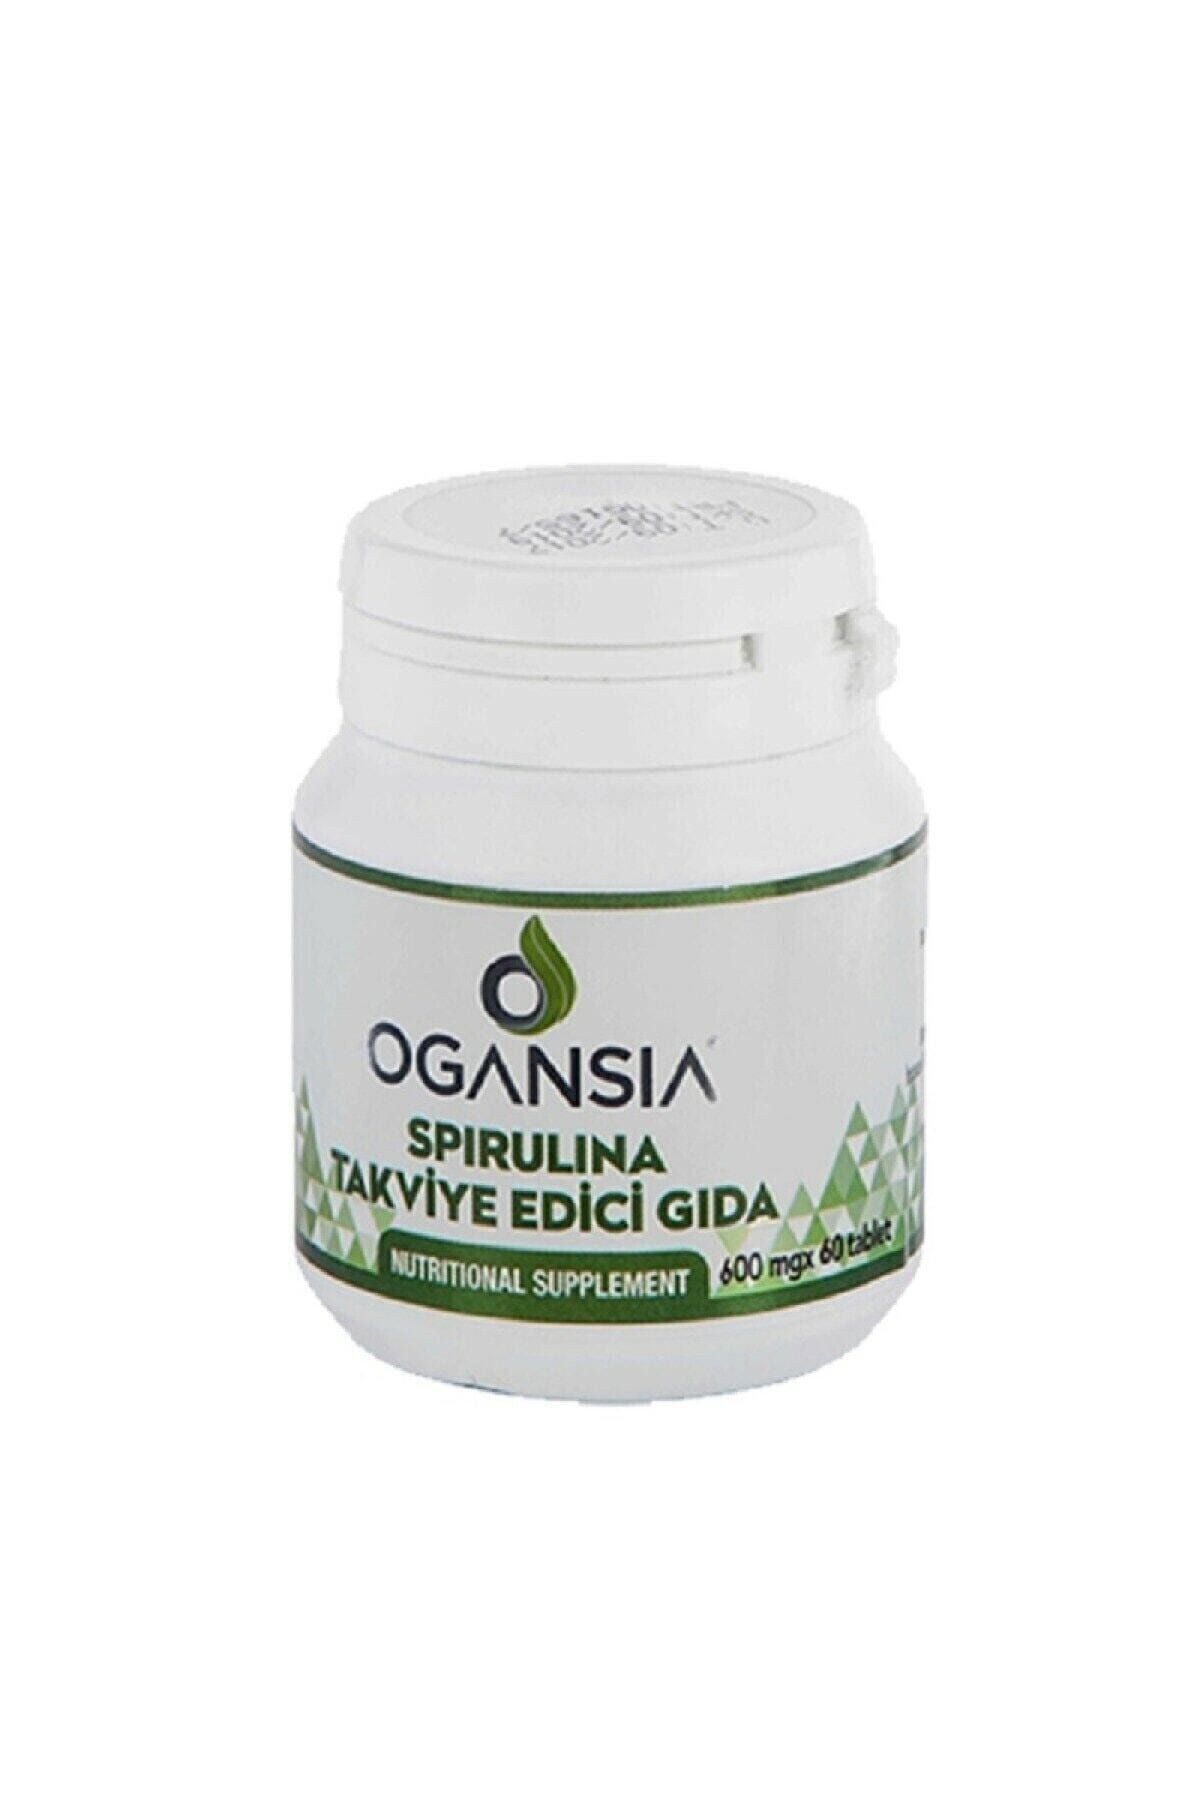 Ogansia Spirulina Takviye Edici Gıda 600 Mg 60 Tablet Mw0002